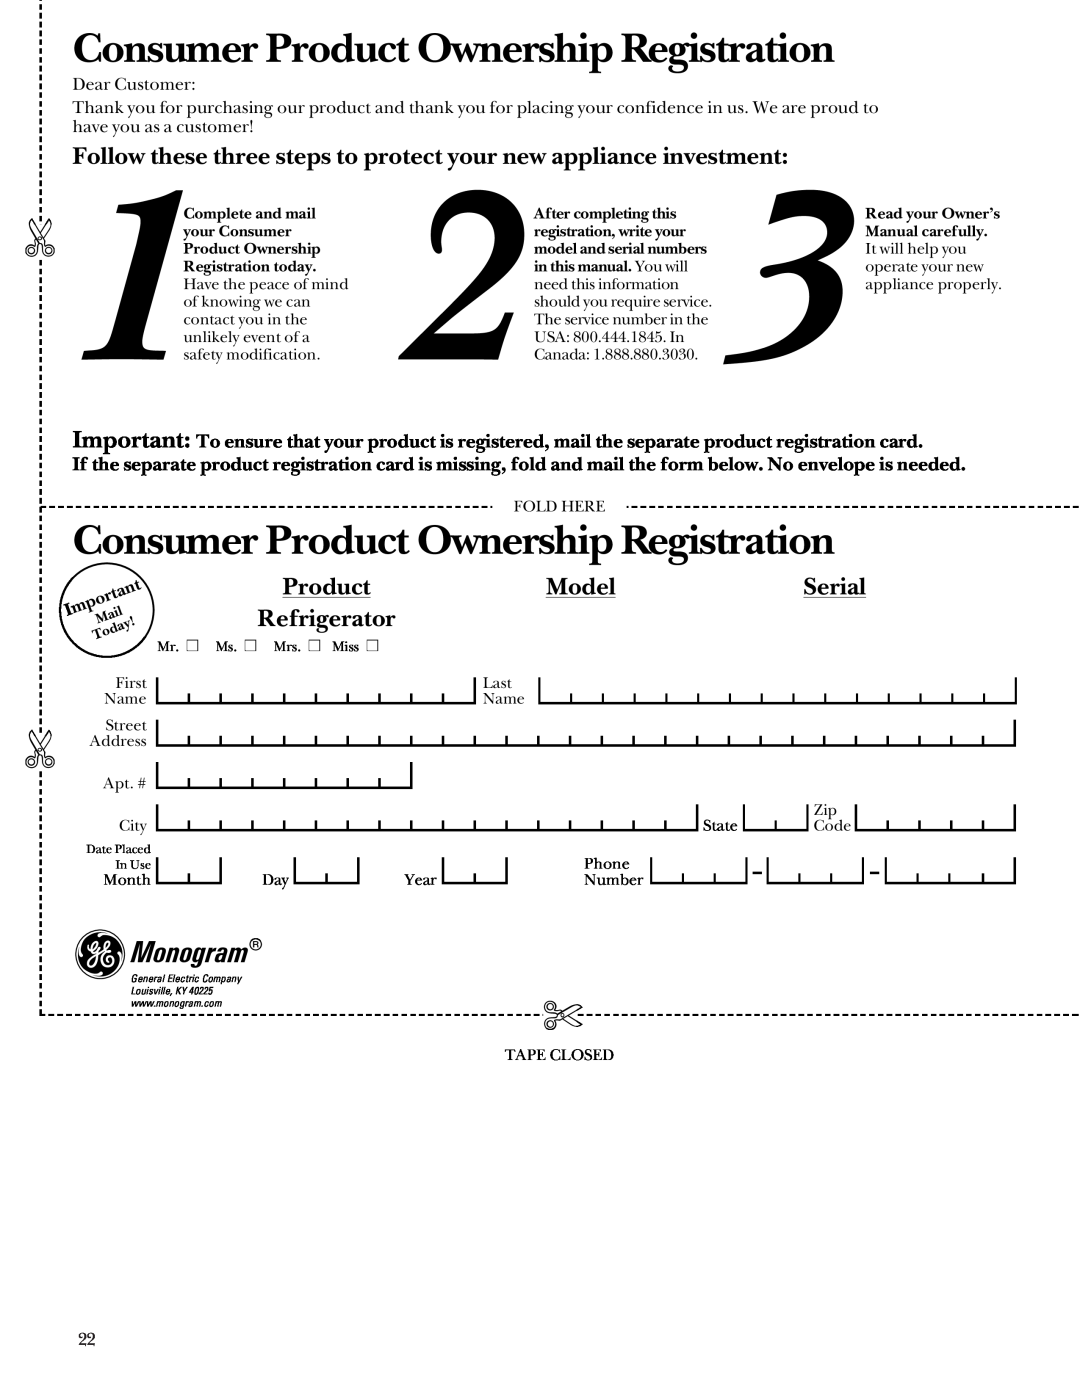 GE Monogram Digital Radiant Cooktop Consumer Product Ownership Registration, Model, Serial, Refrigerator, Monogram 